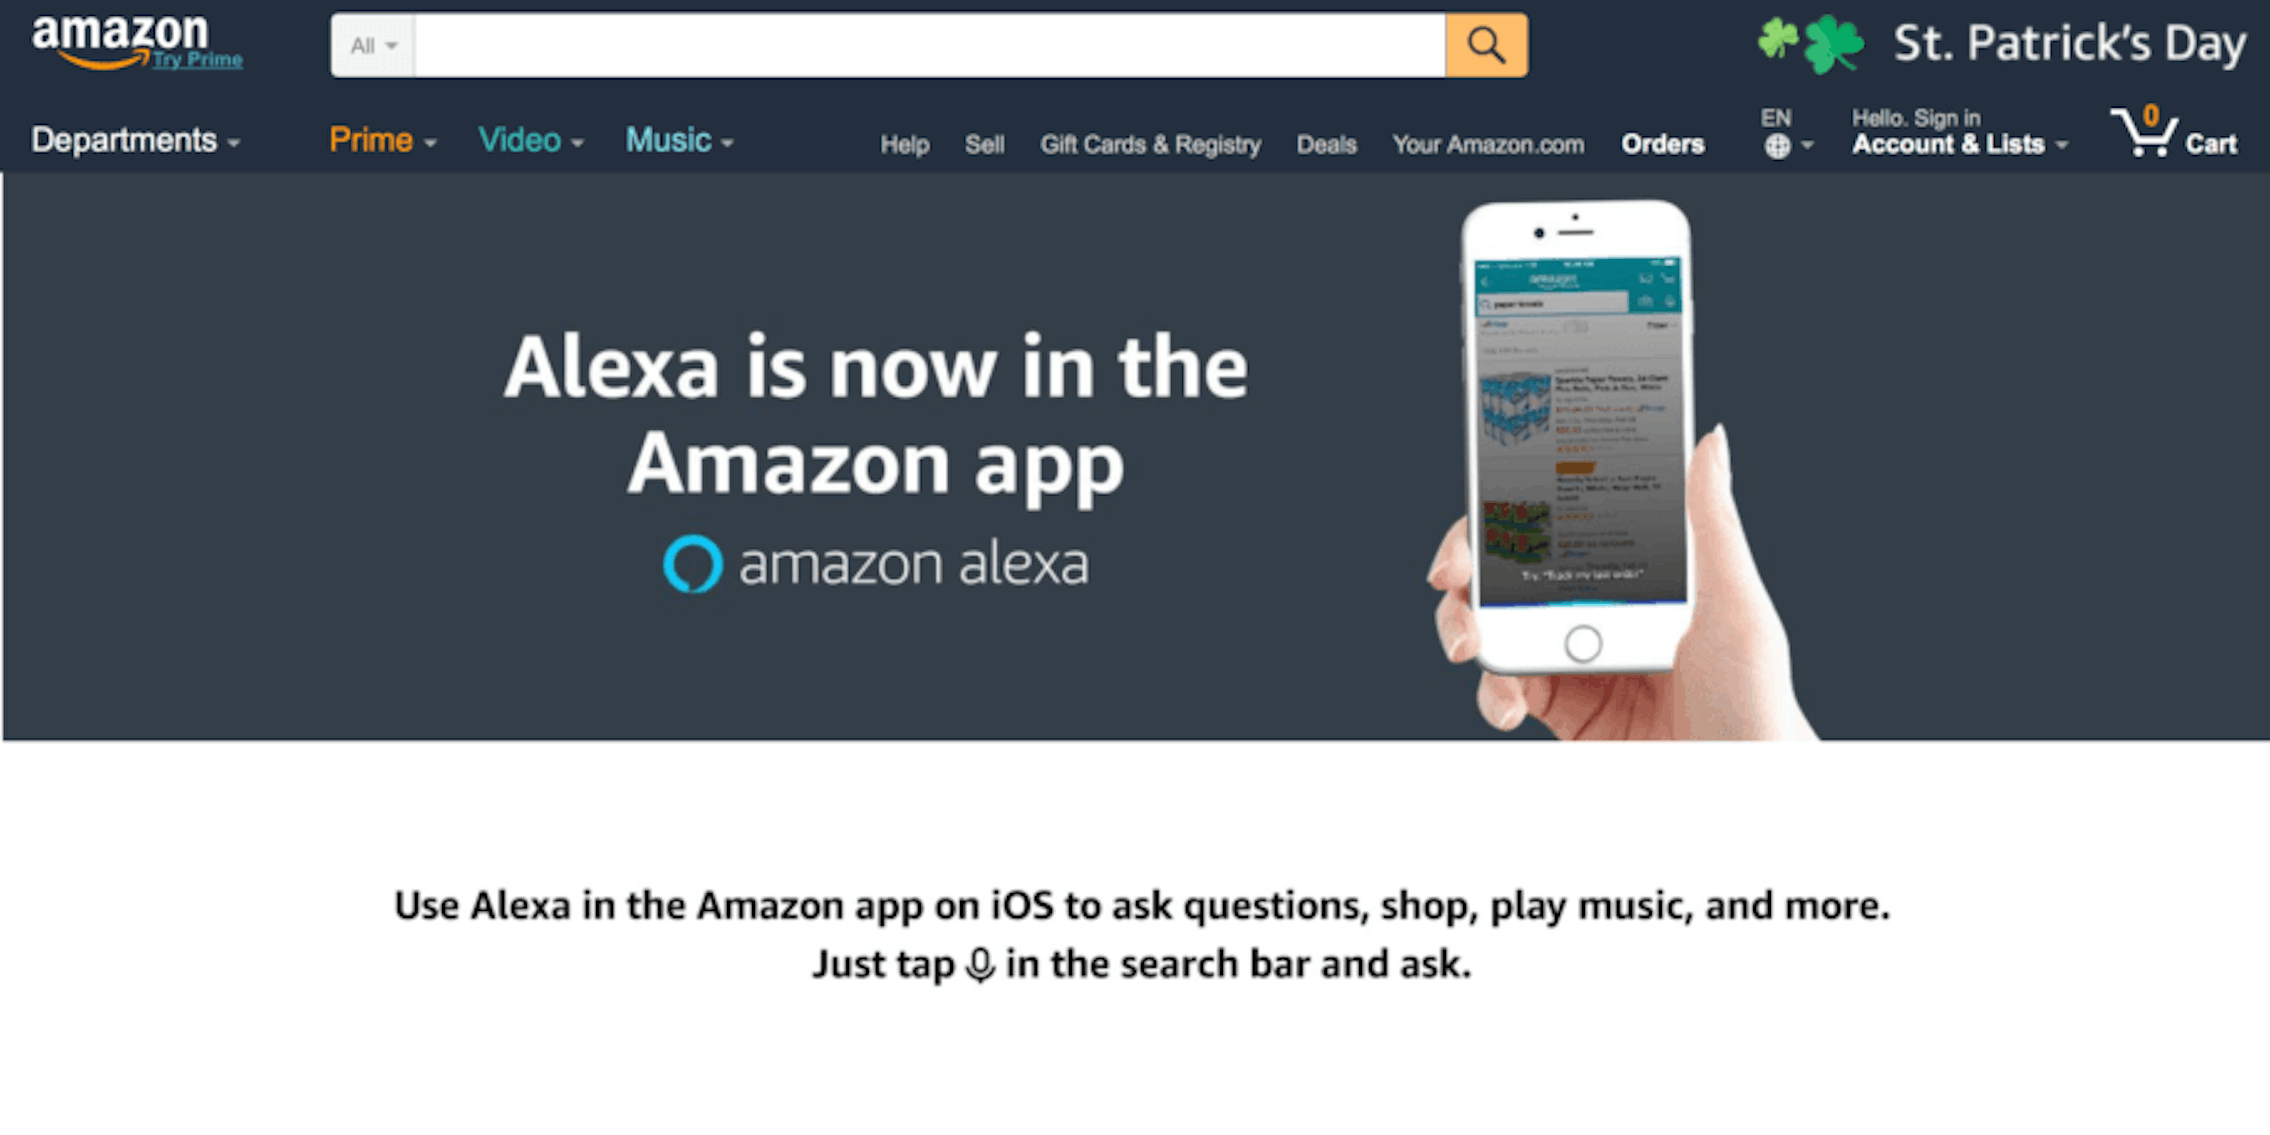 Screengrab of Amazon website